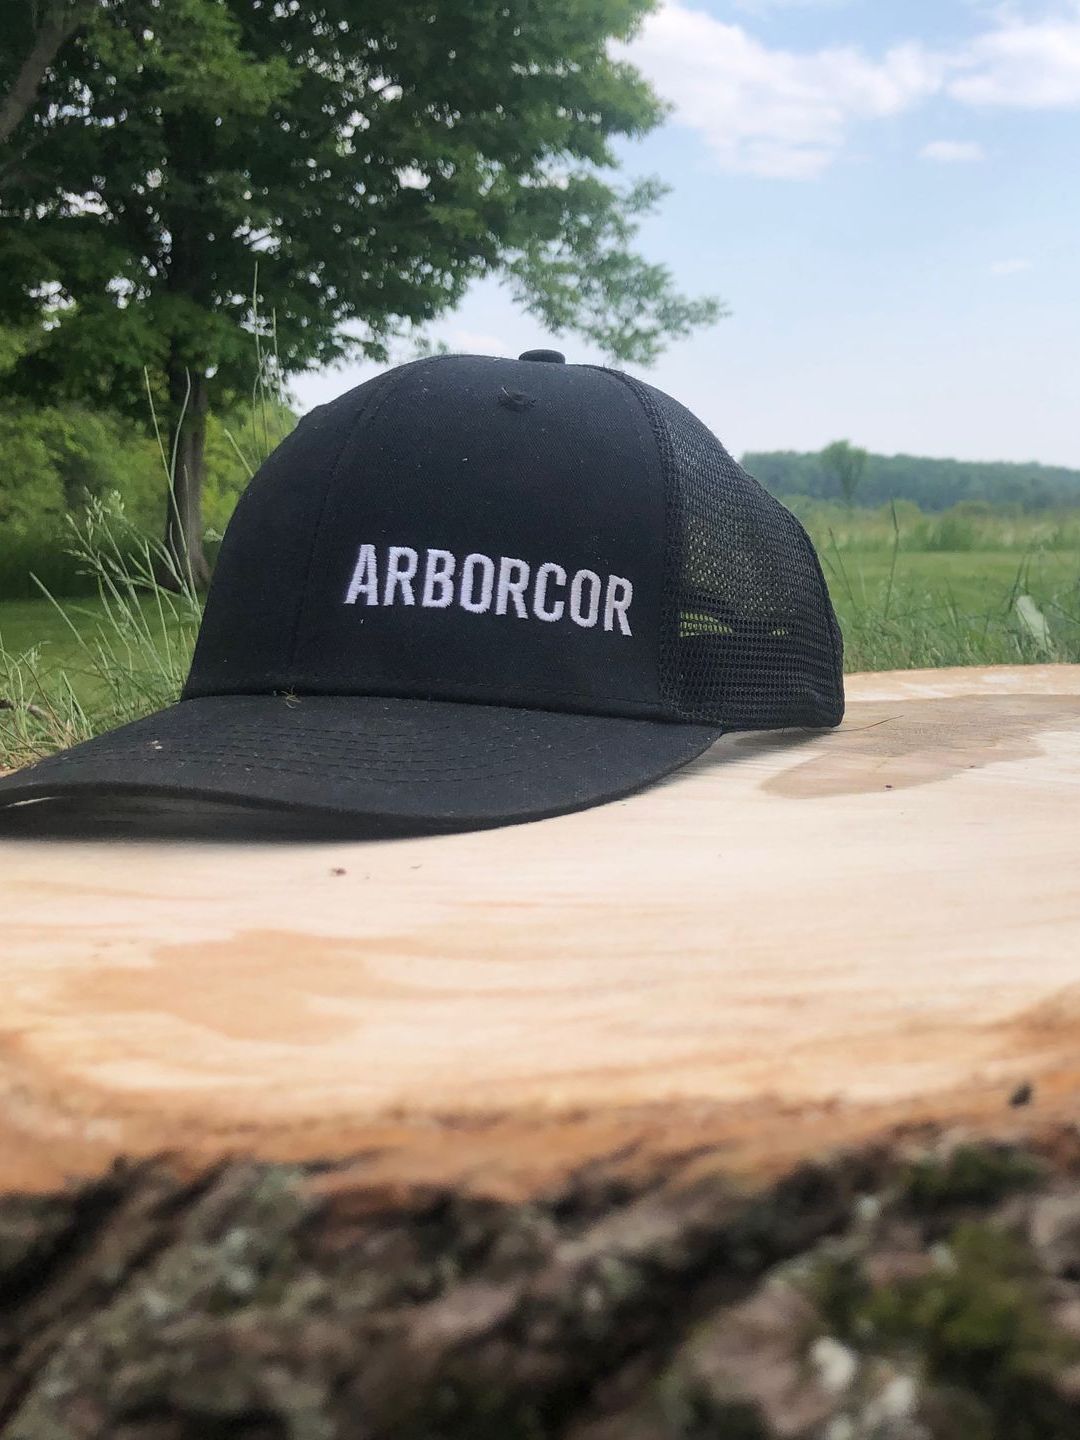 choose Arborcor Tree Care